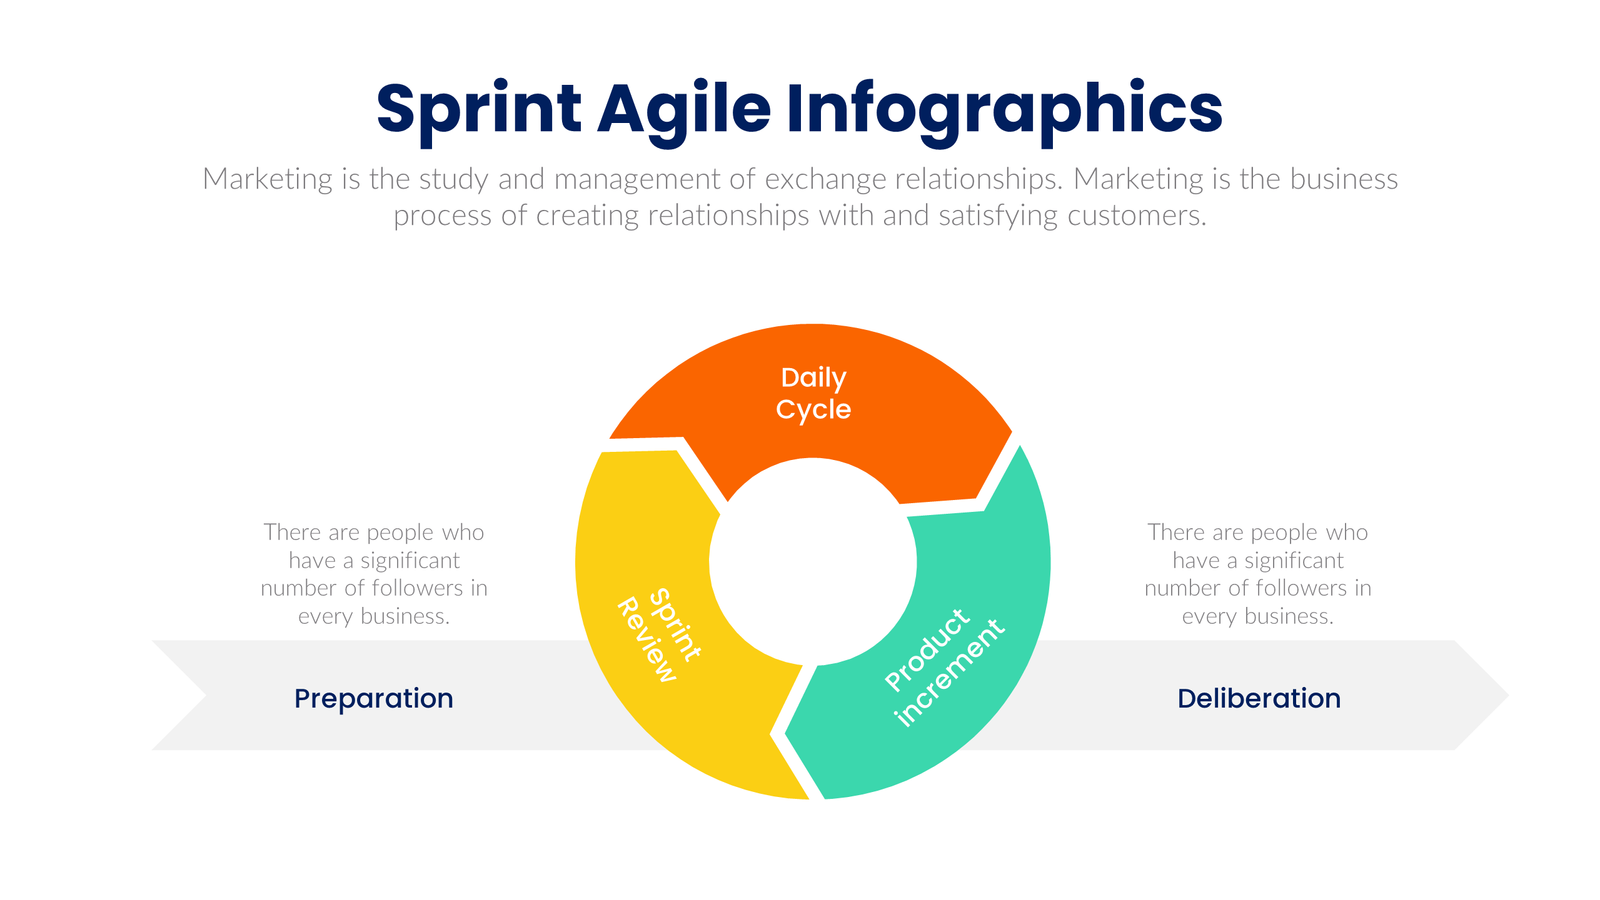 Sprint Agile Infographics